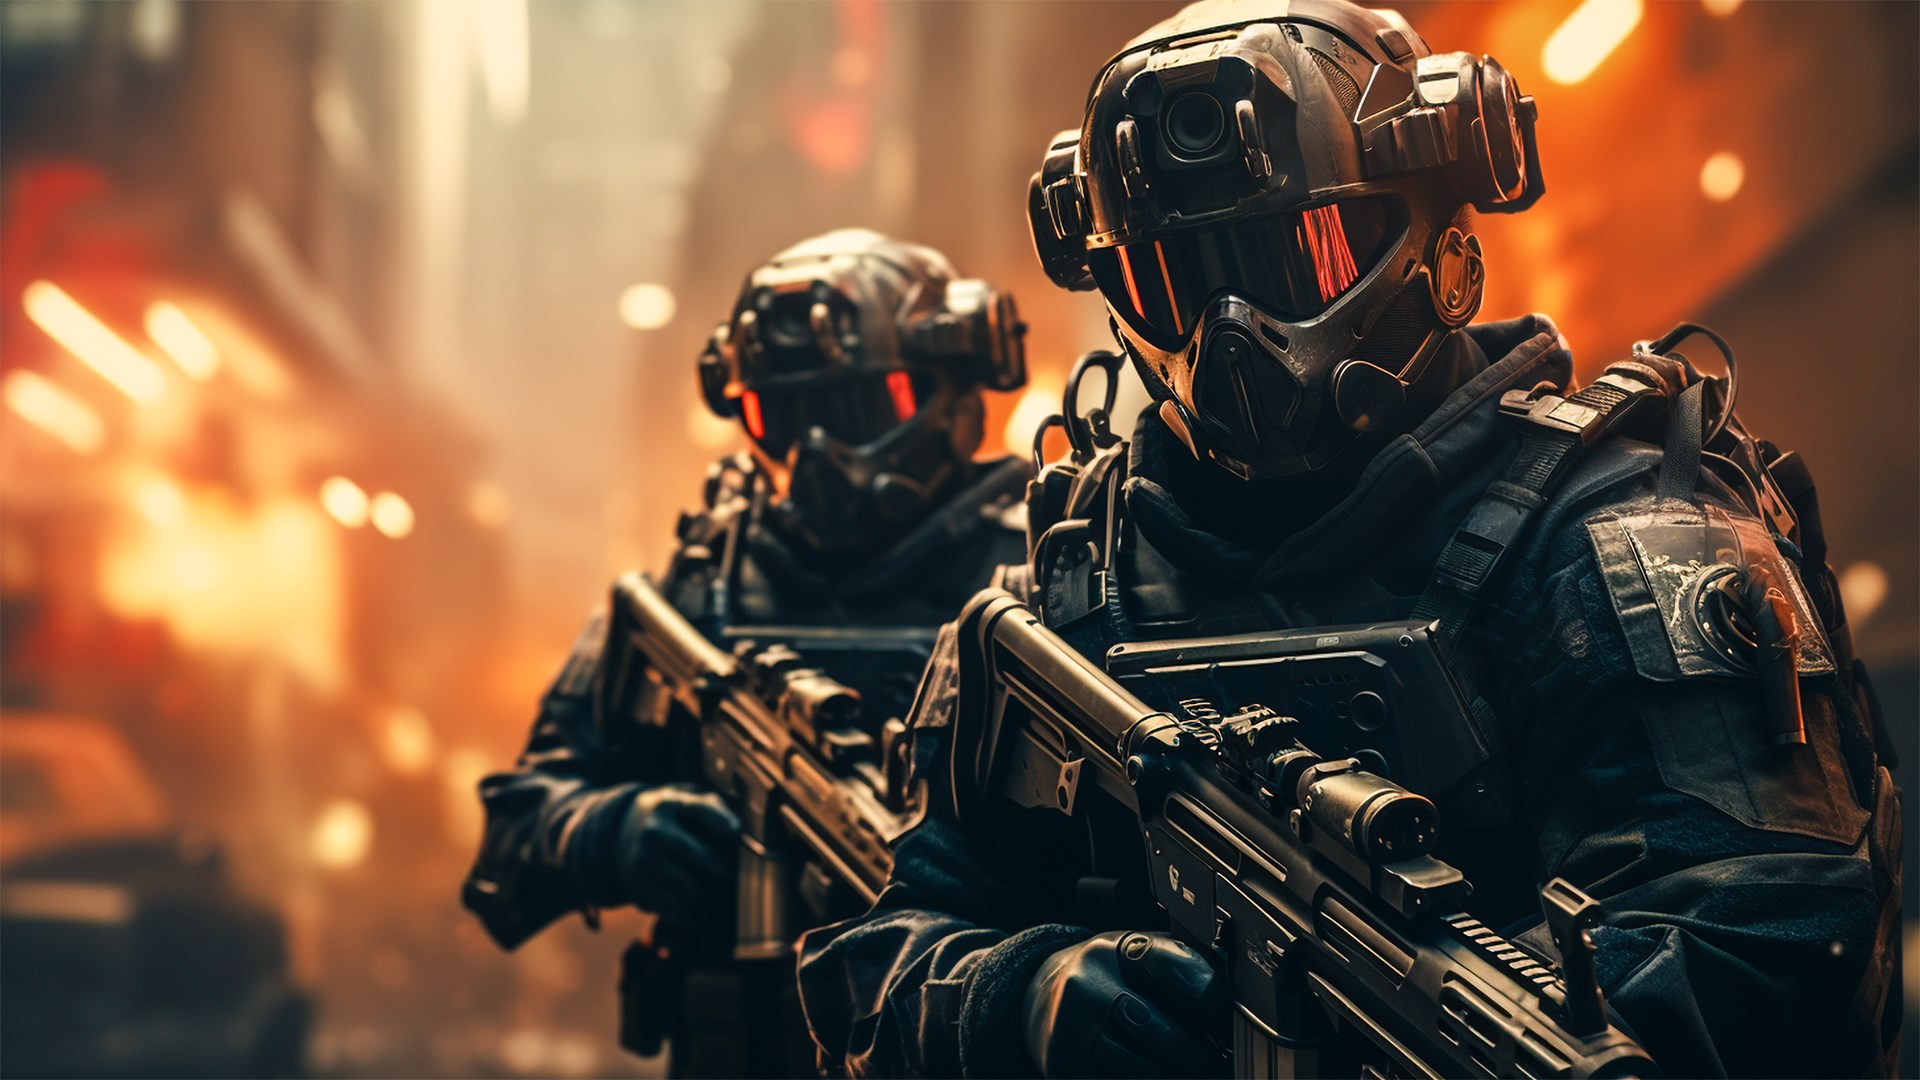 Get Striker Zone: War Shooting Games - Microsoft Store